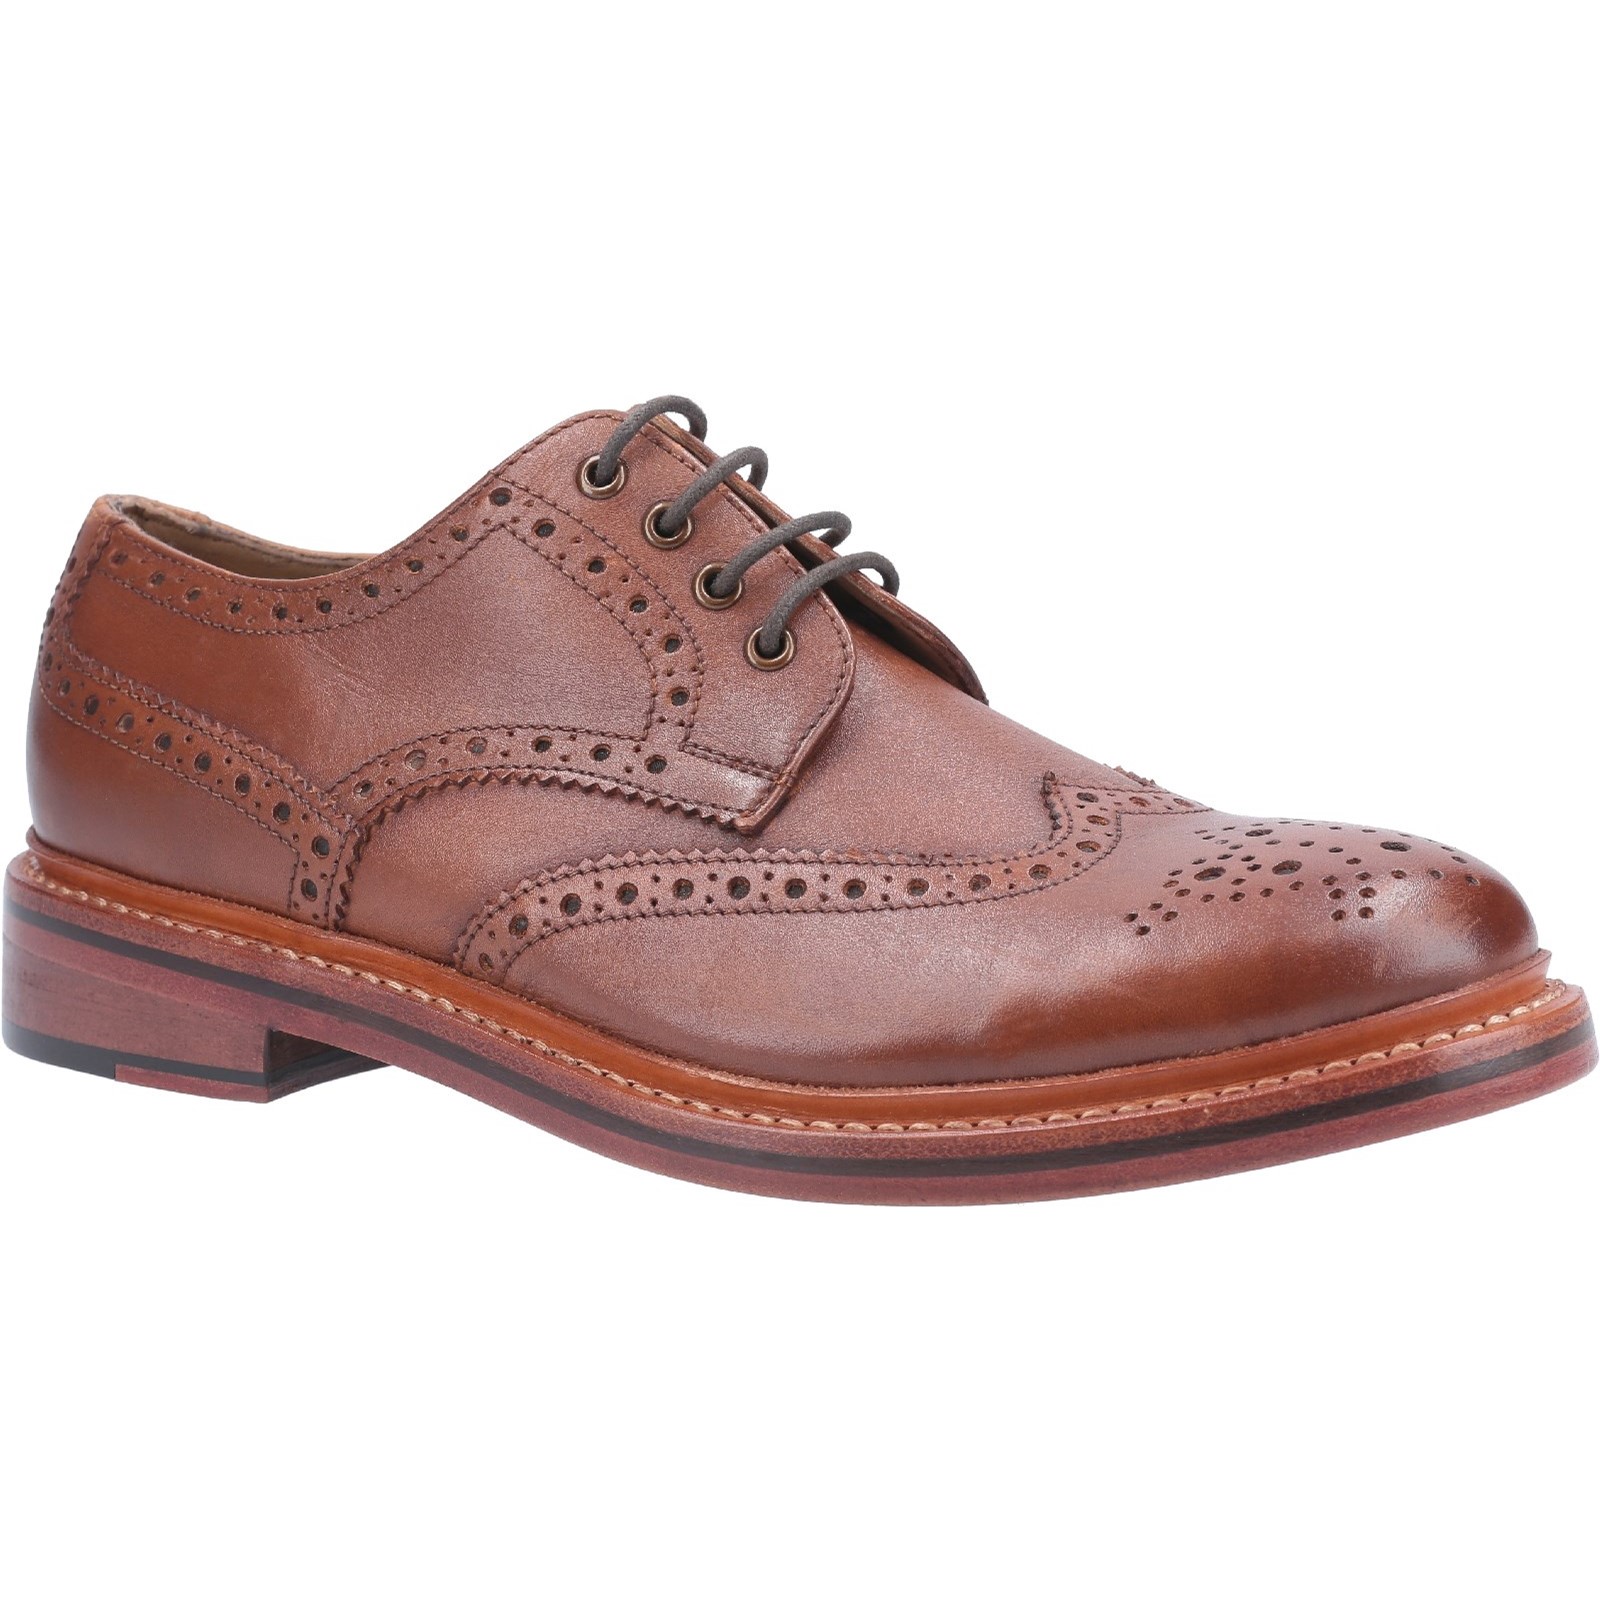 Quenington Leather Goodyear Welt Lace Up Shoe